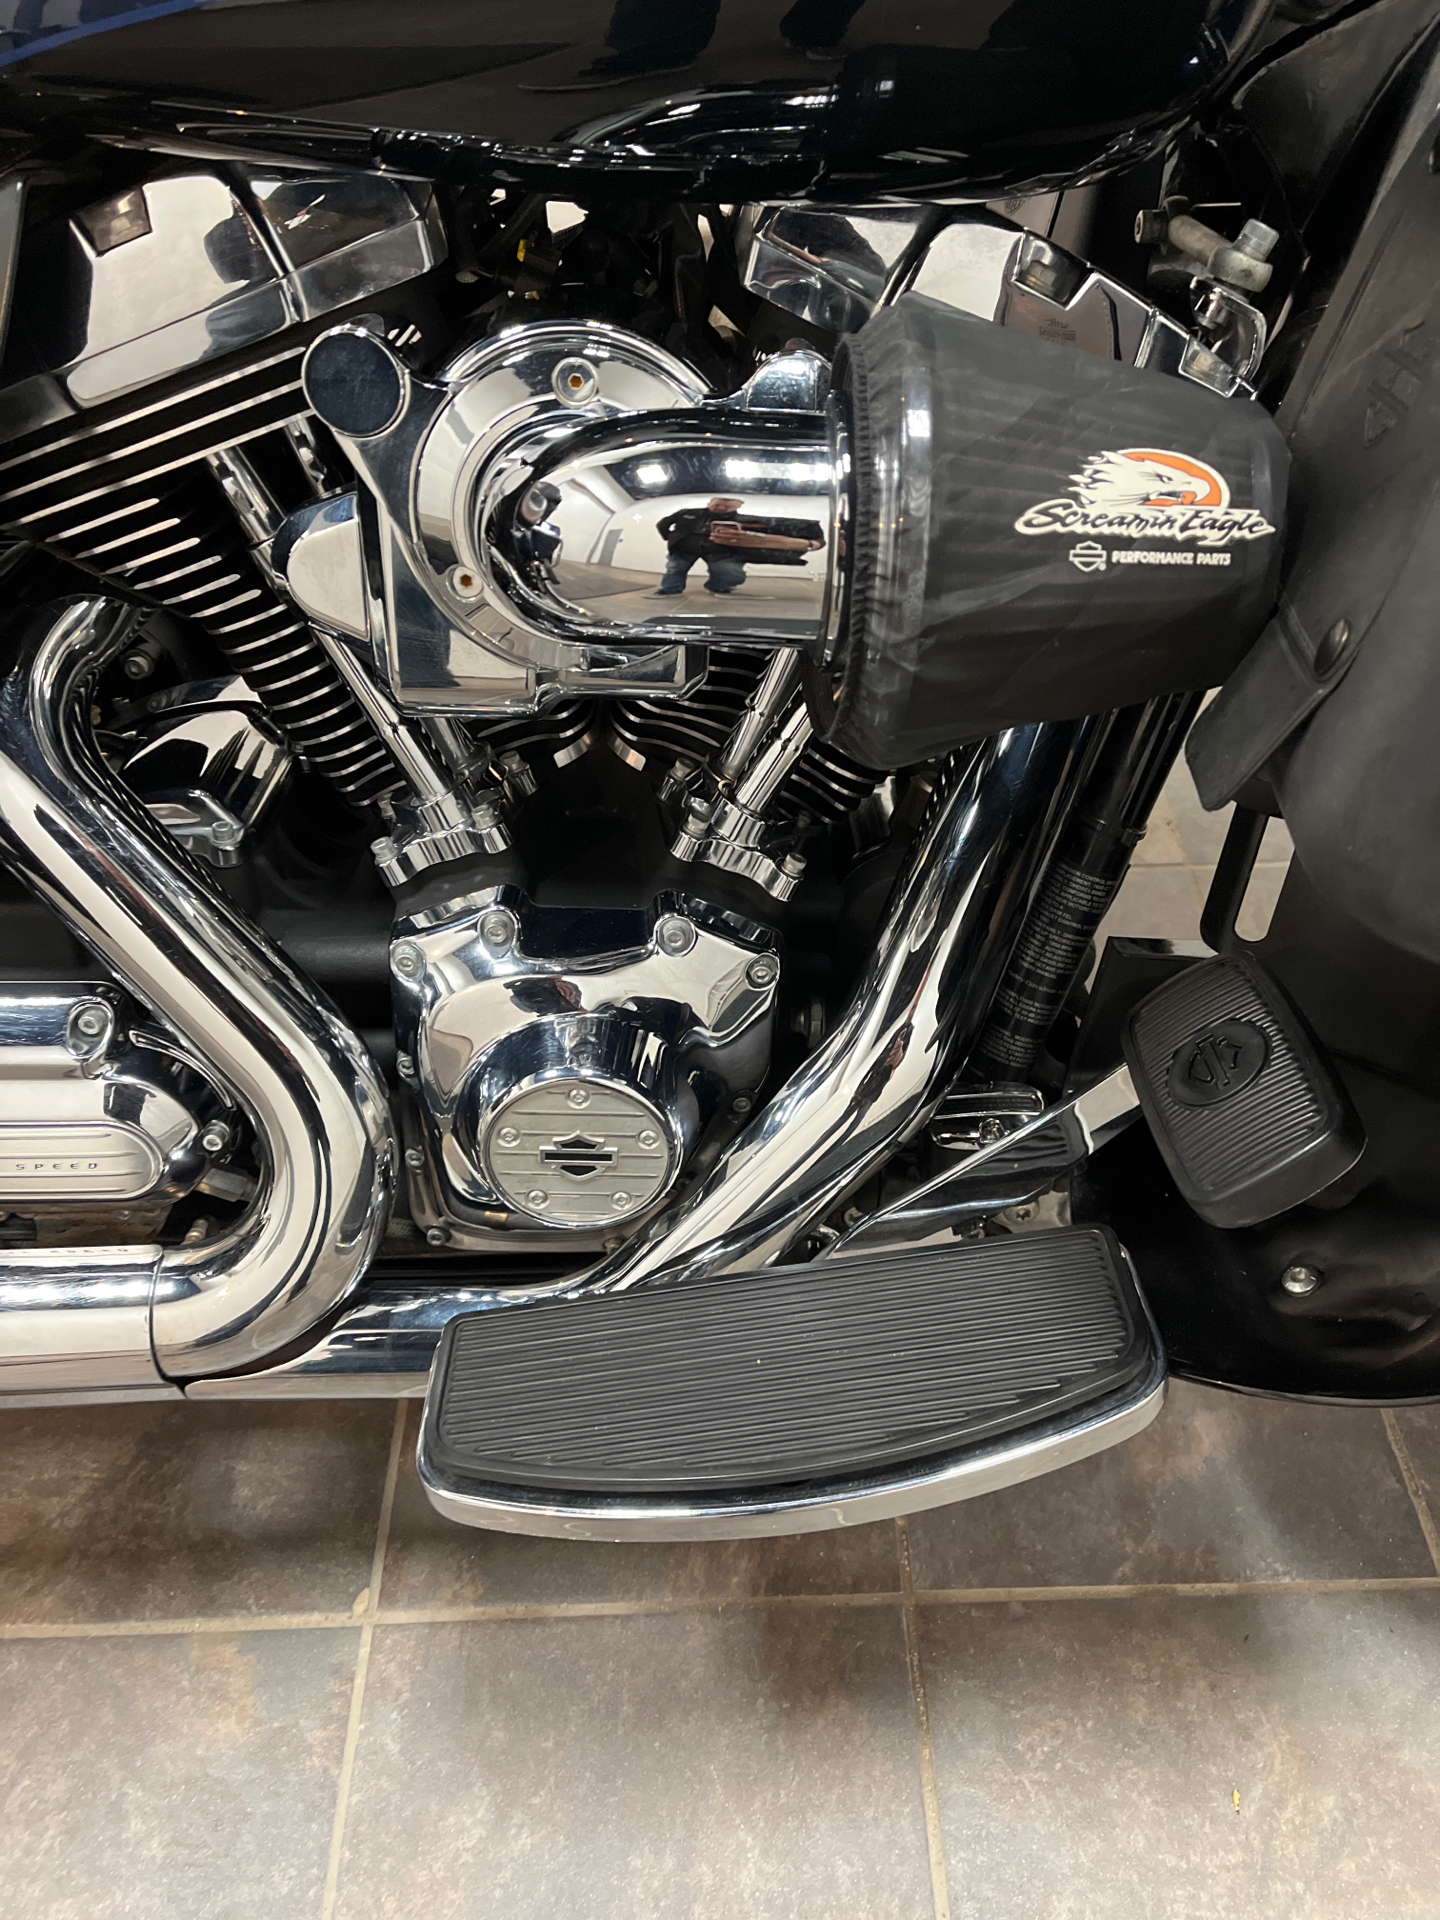 2013 Harley-Davidson Electra Glide® Ultra Limited in Alexandria, Minnesota - Photo 8